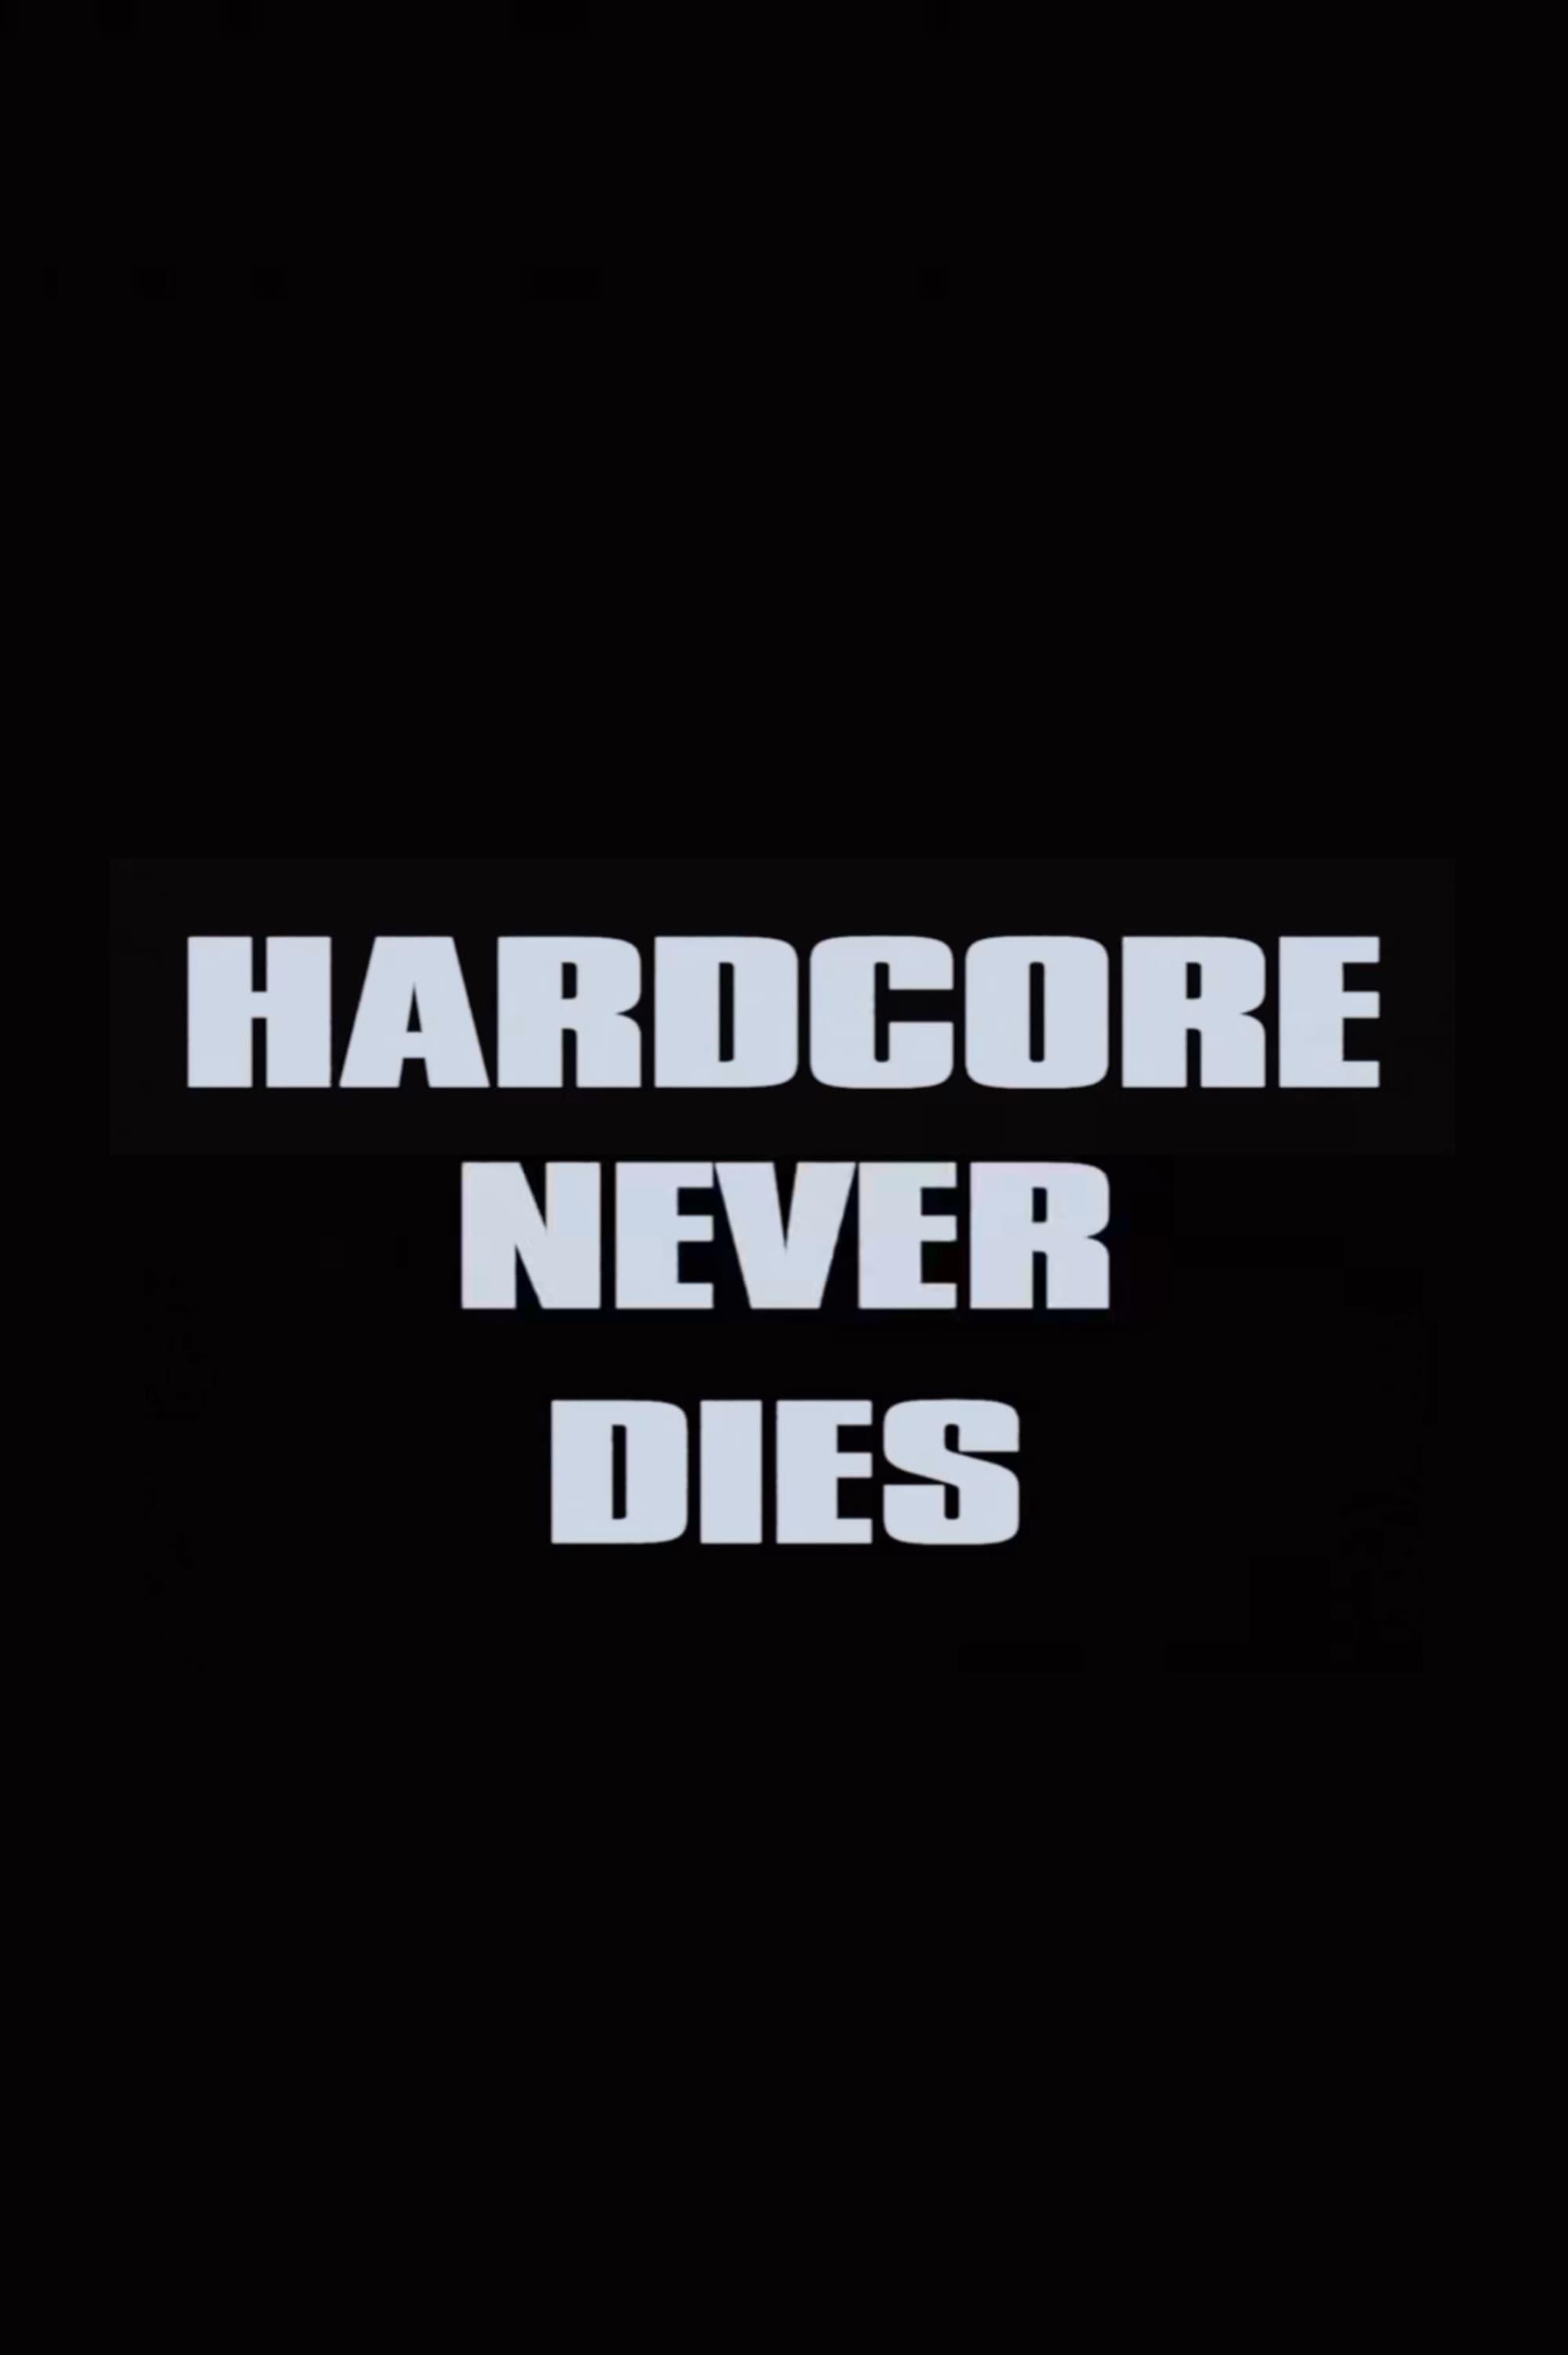 Hardcore Never Dies poster